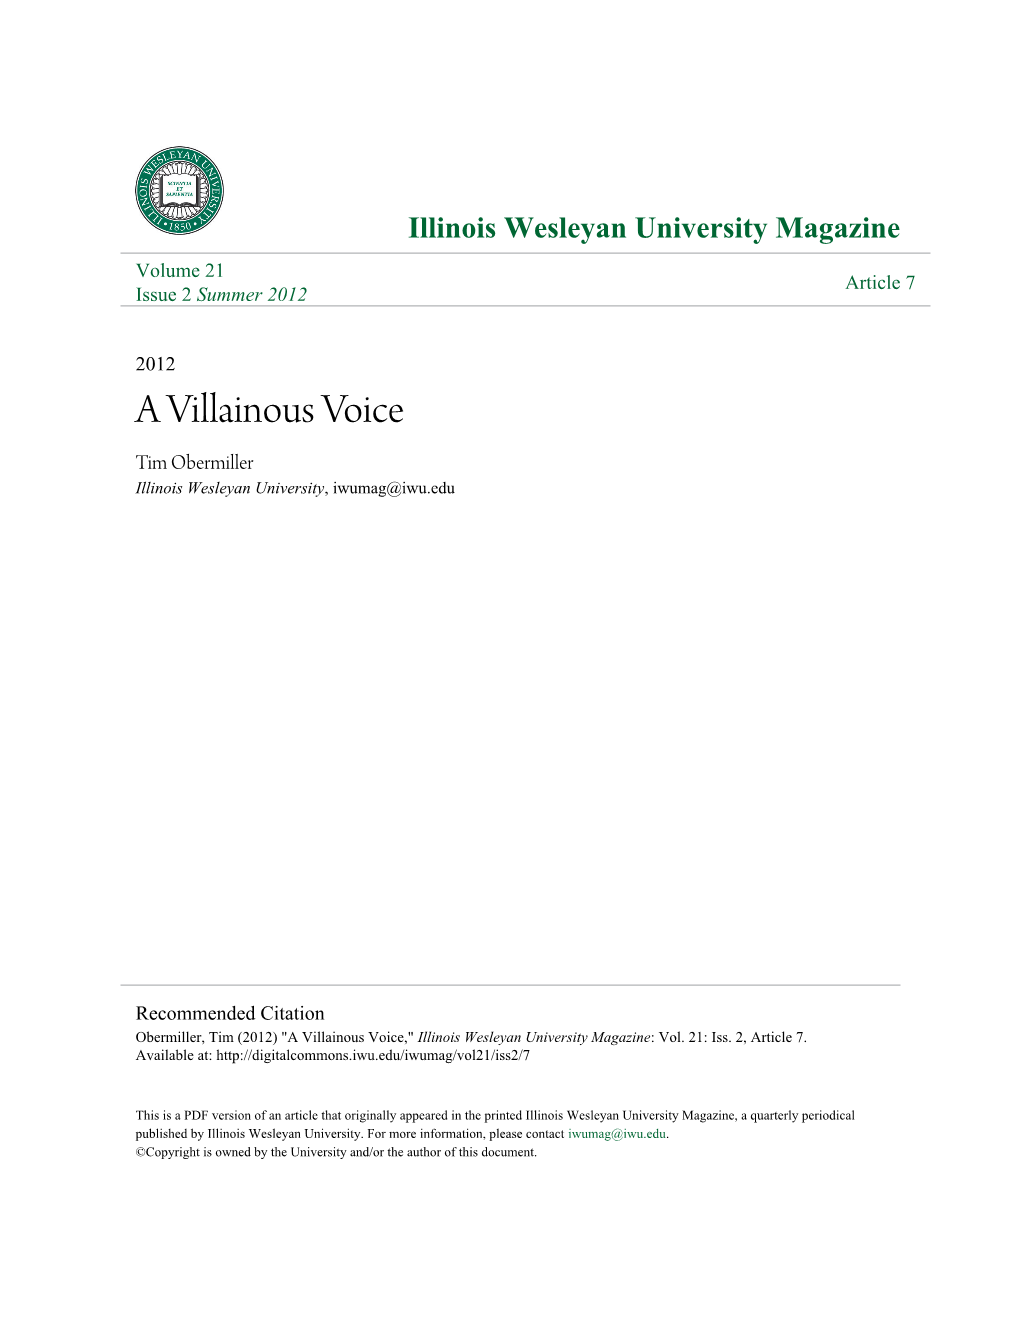 A Villainous Voice Tim Obermiller Illinois Wesleyan University, Iwumag@Iwu.Edu